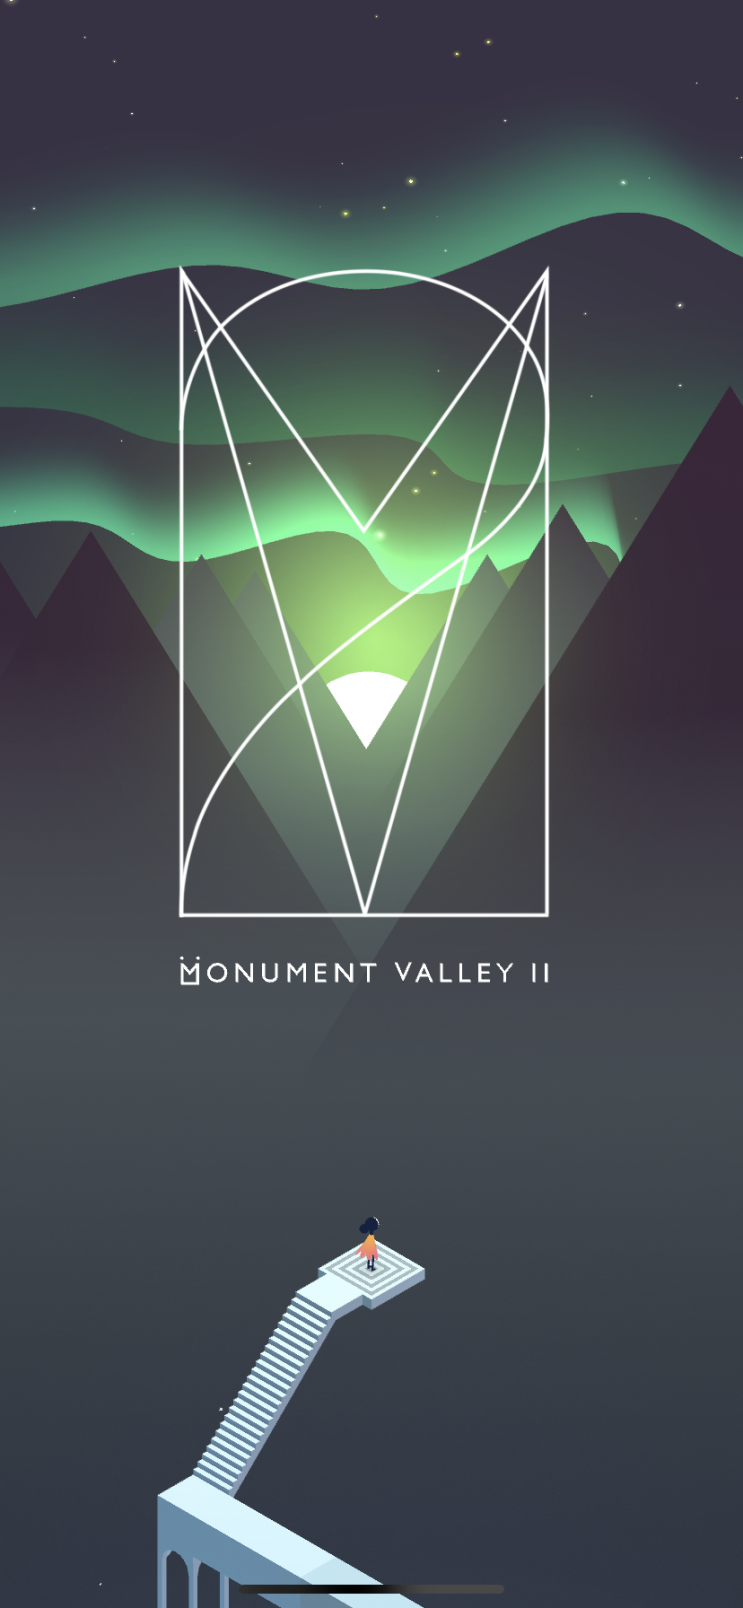 monument valley2 (모뉴먼트 밸리2) 모바일 힐링 게임